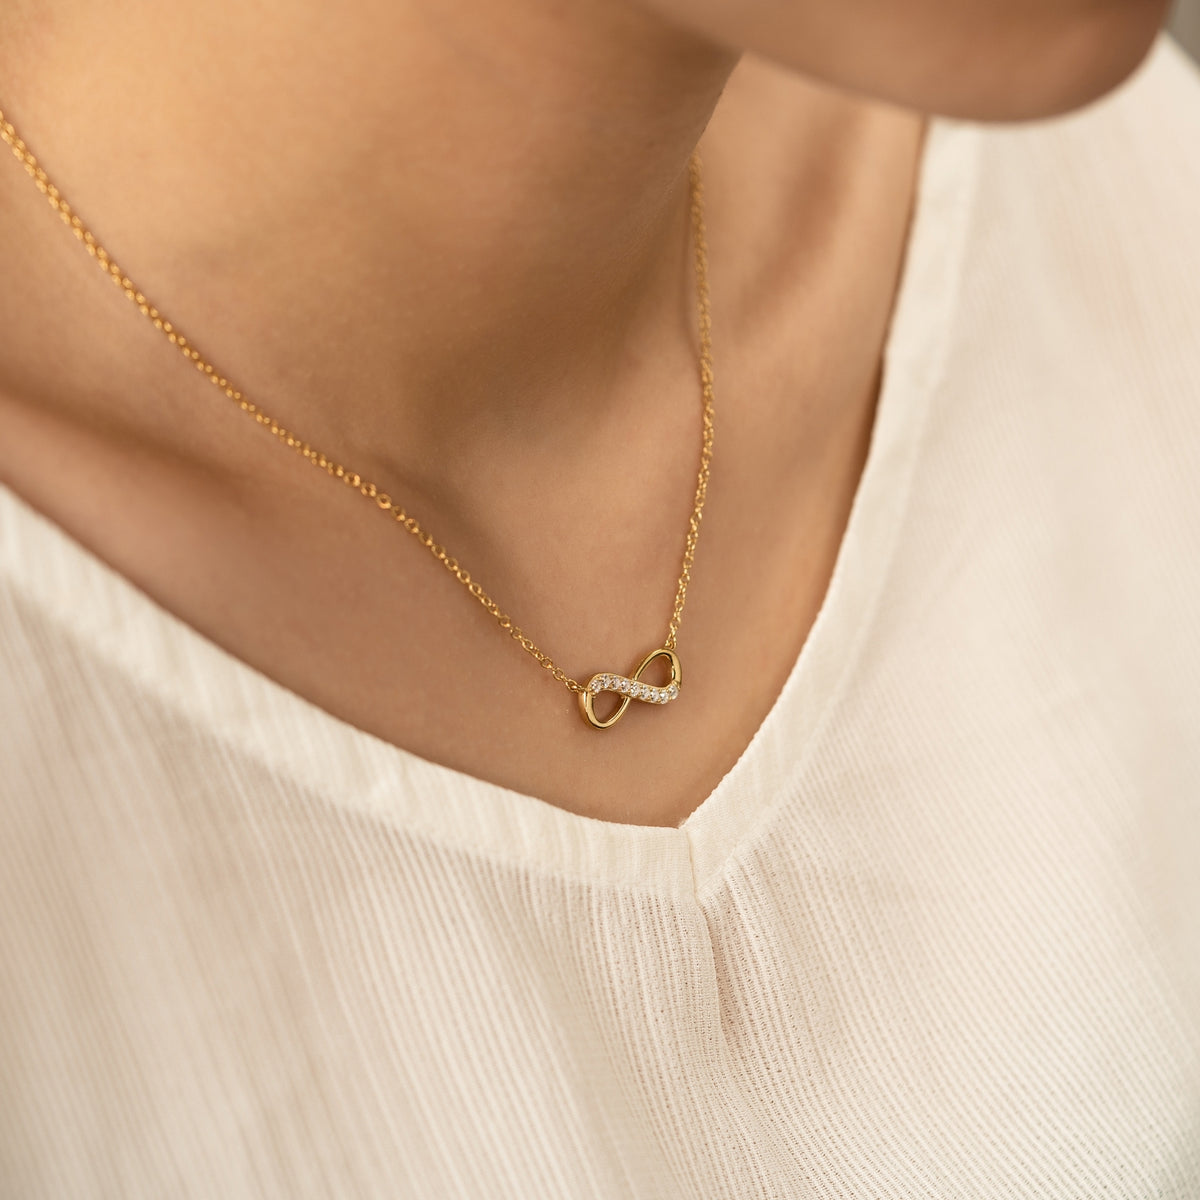 Infinity Necklace Pendant